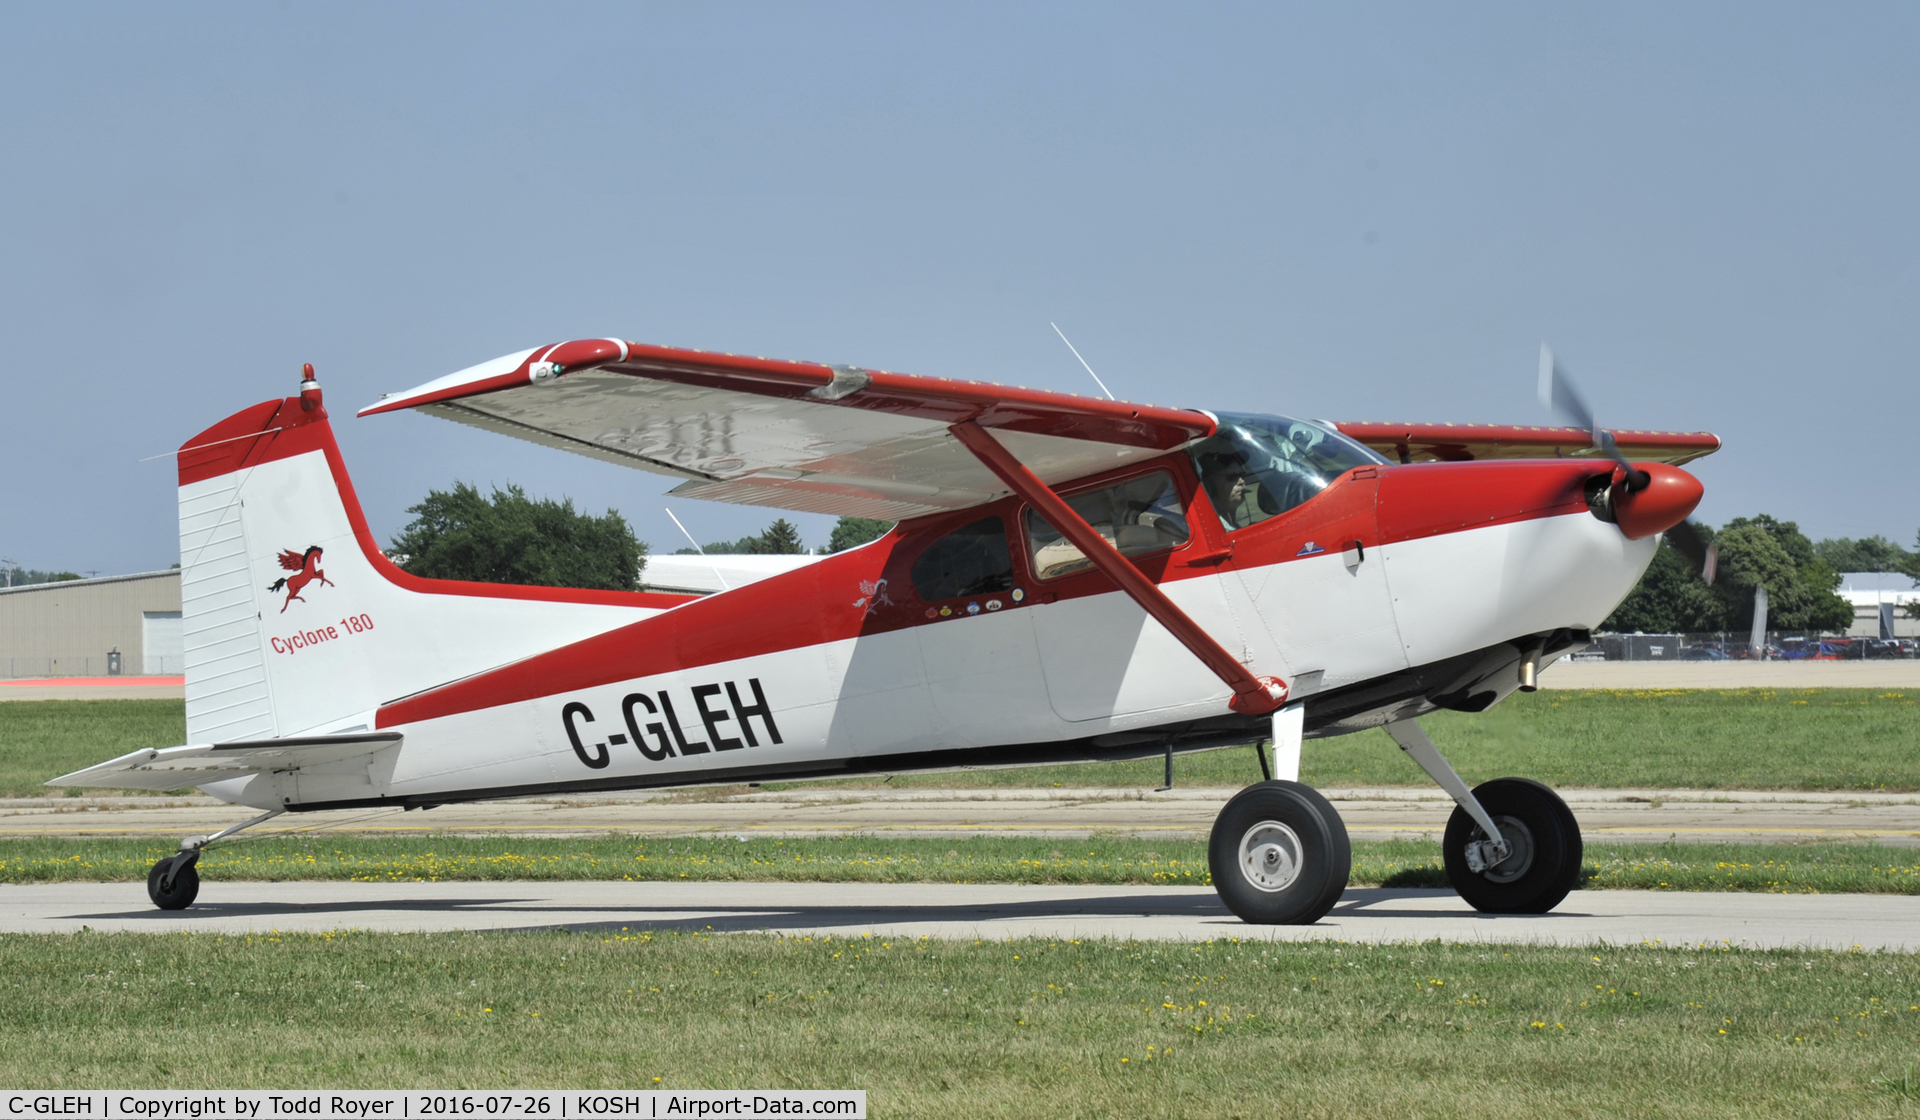 C-GLEH, 2004 St-Just Cyclone 180 C/N 0023, Airventure 2014